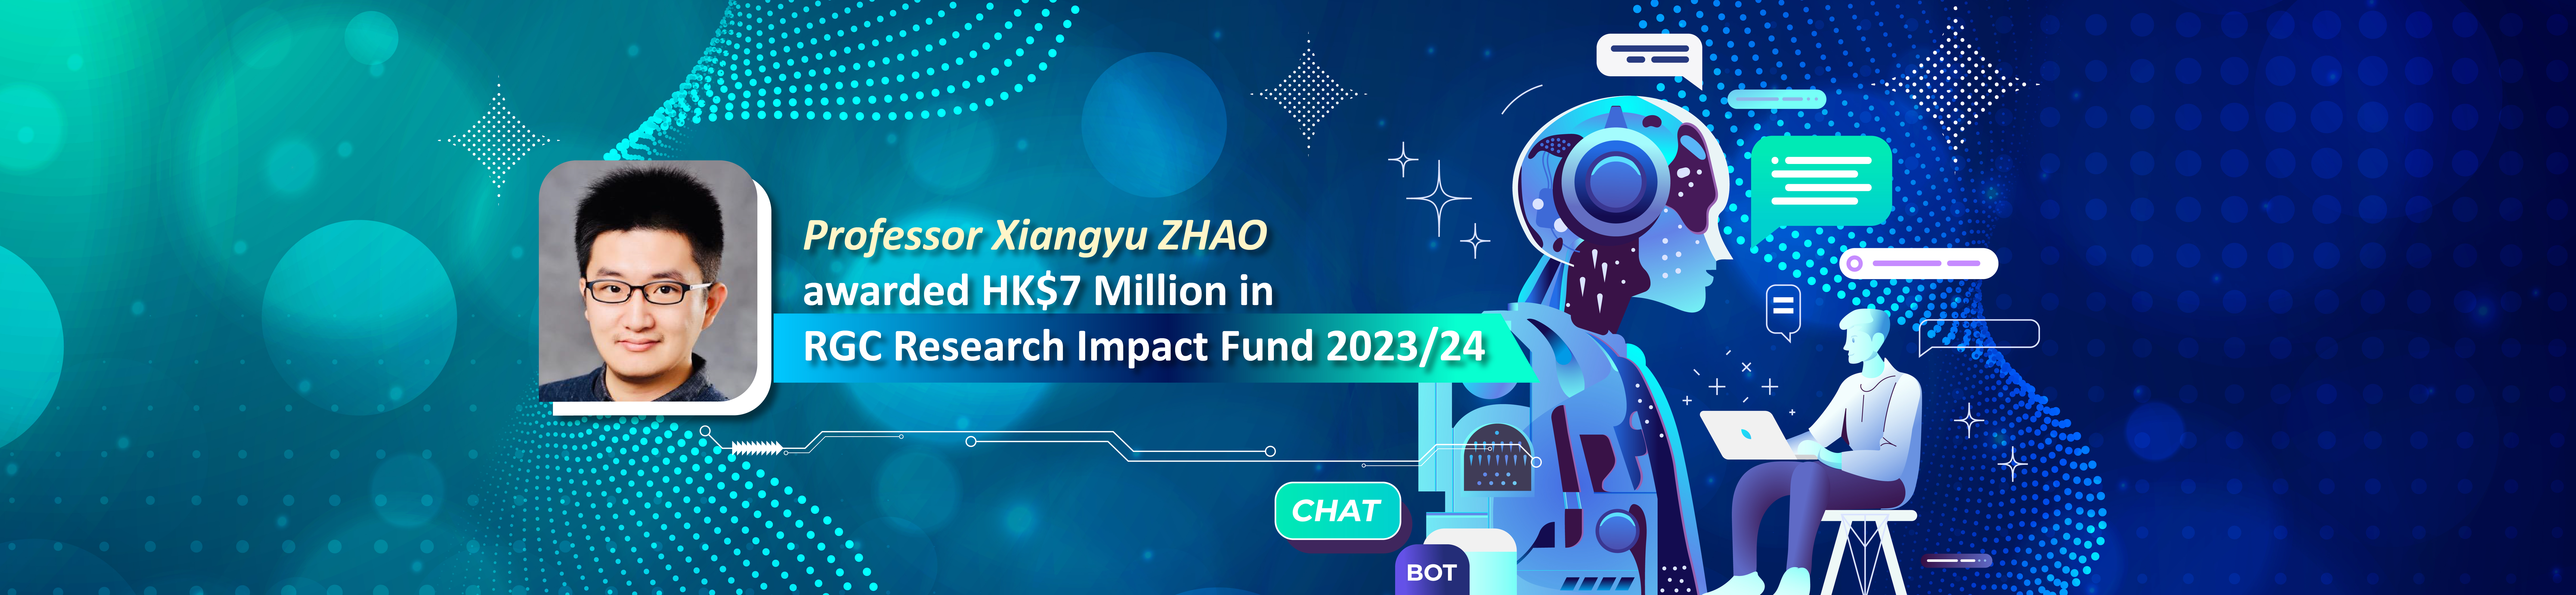 Professor Xiangyu ZHAO awarded HK$7 Million in RGC Research Impact Fund 2023/24